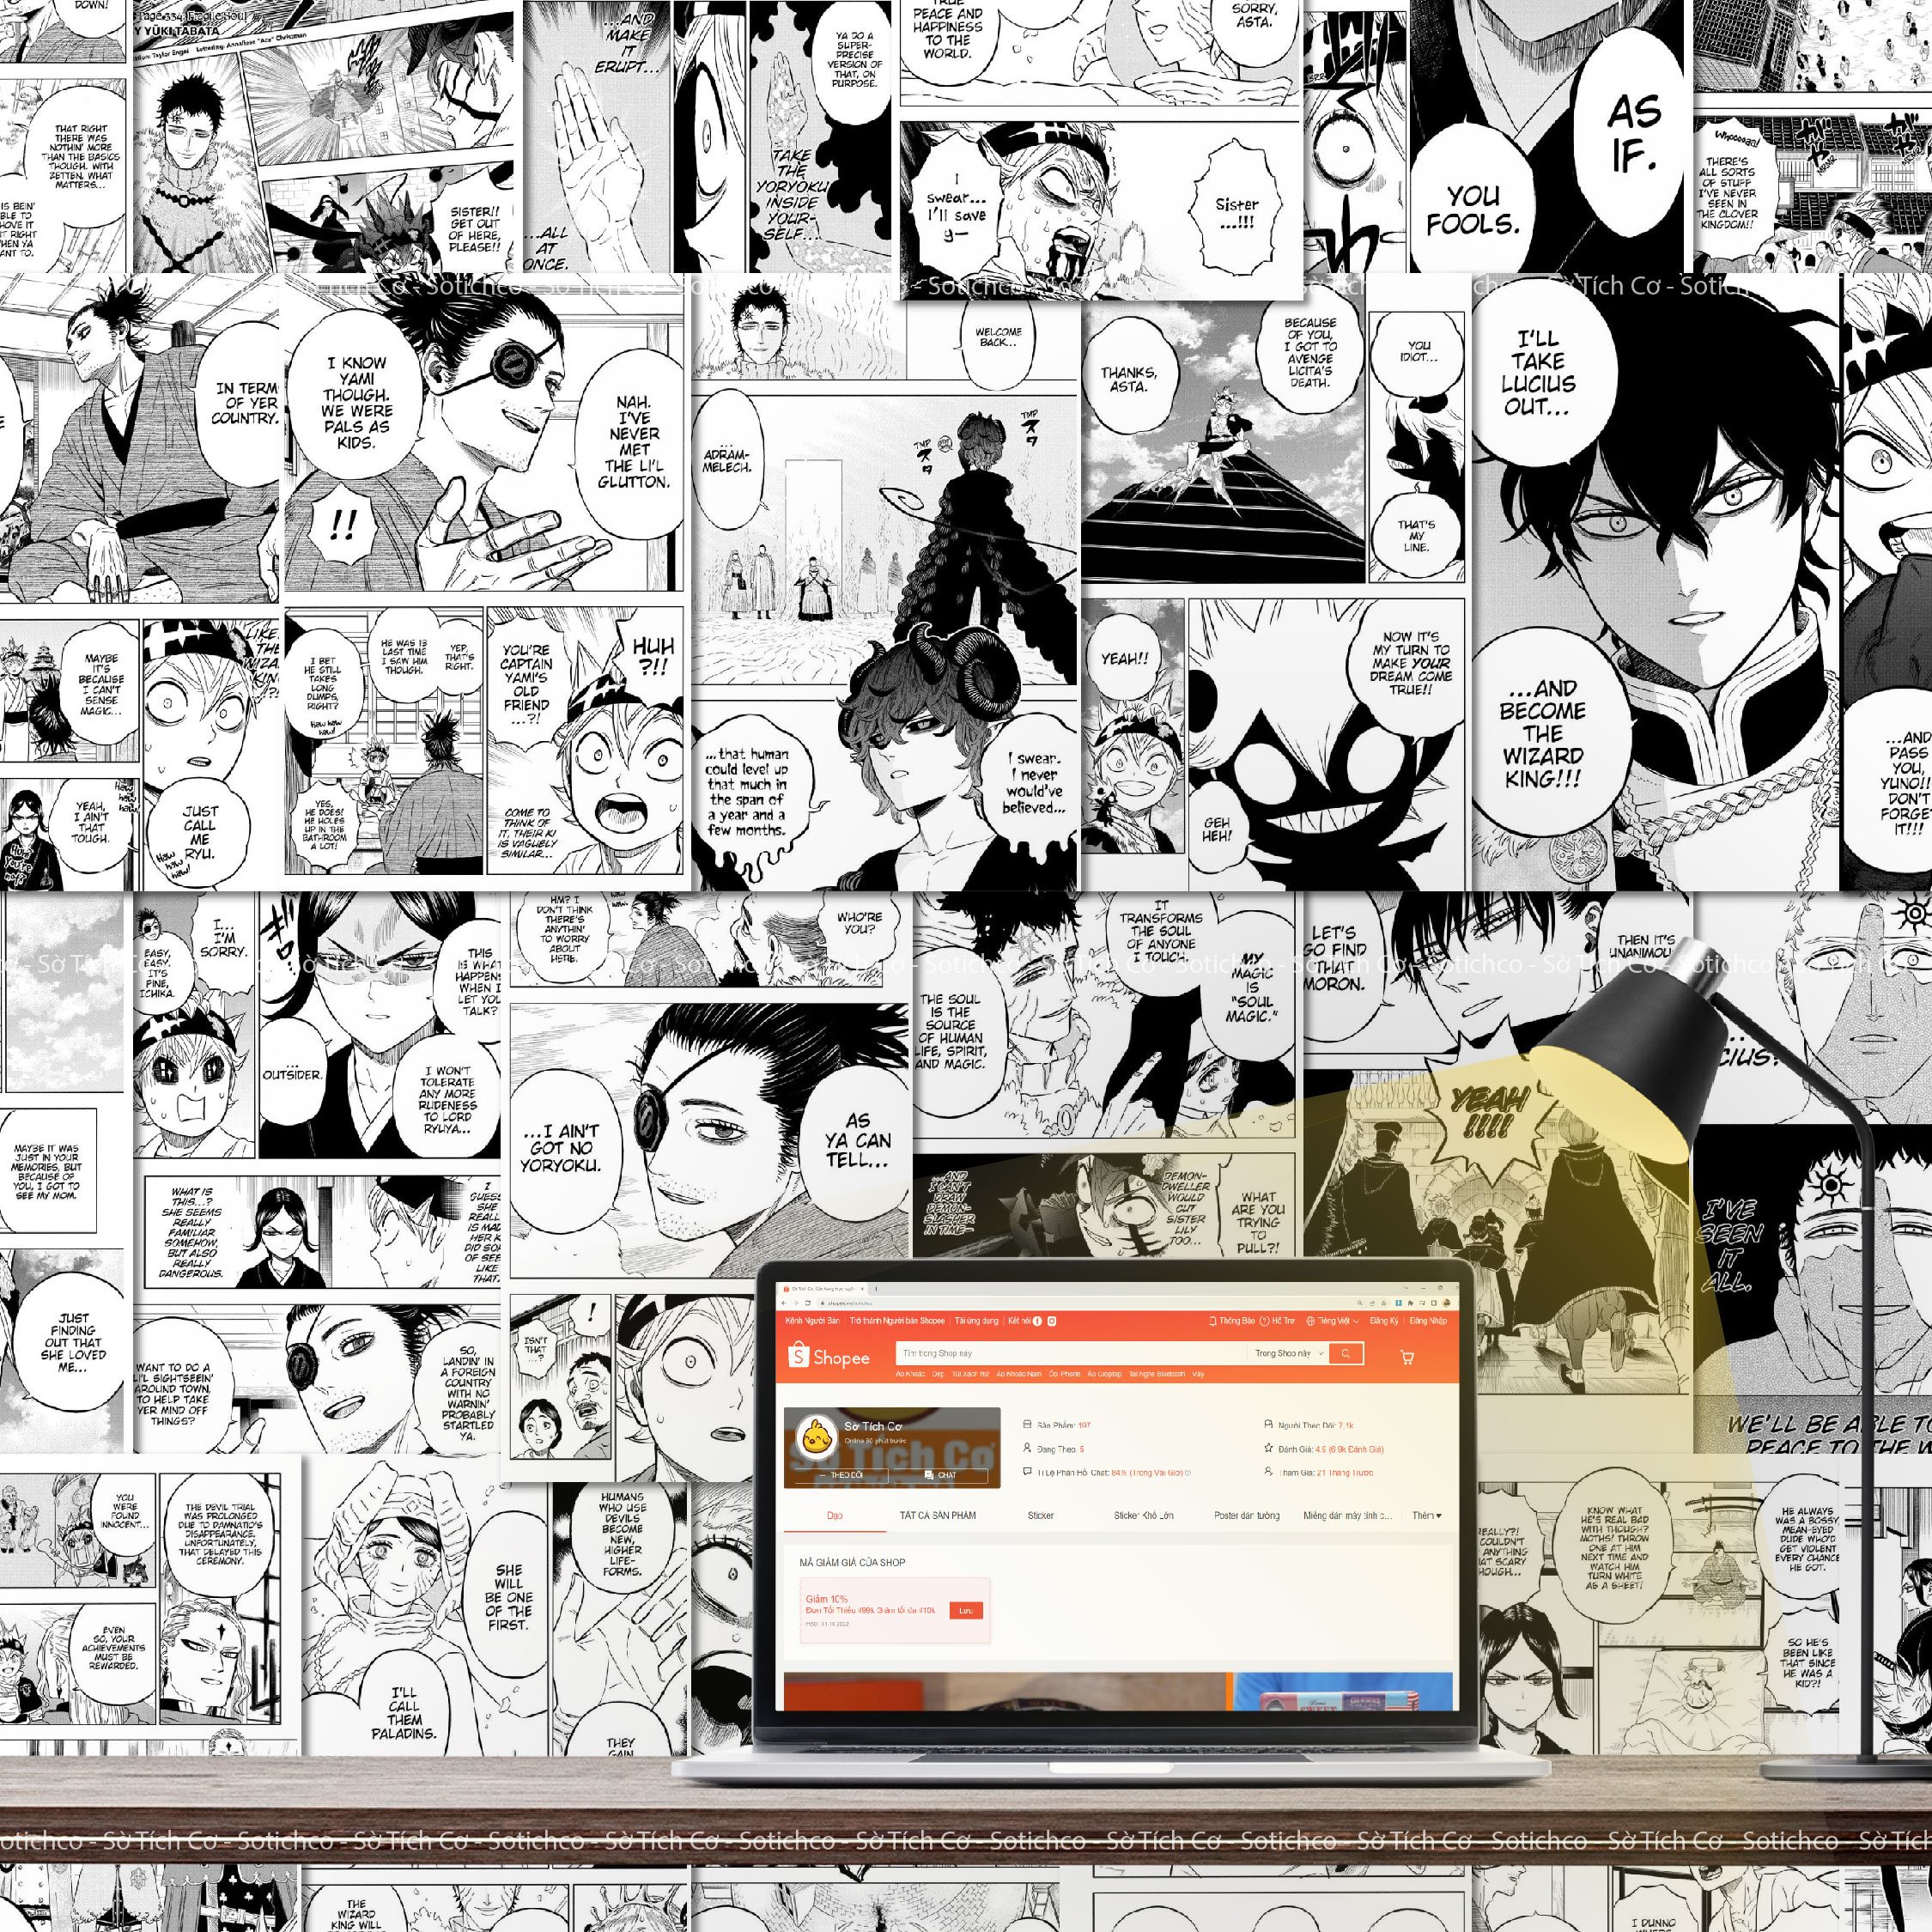 Wall paintings, wall posters - Anime manga Black Clover, Jujutsu Kaisen